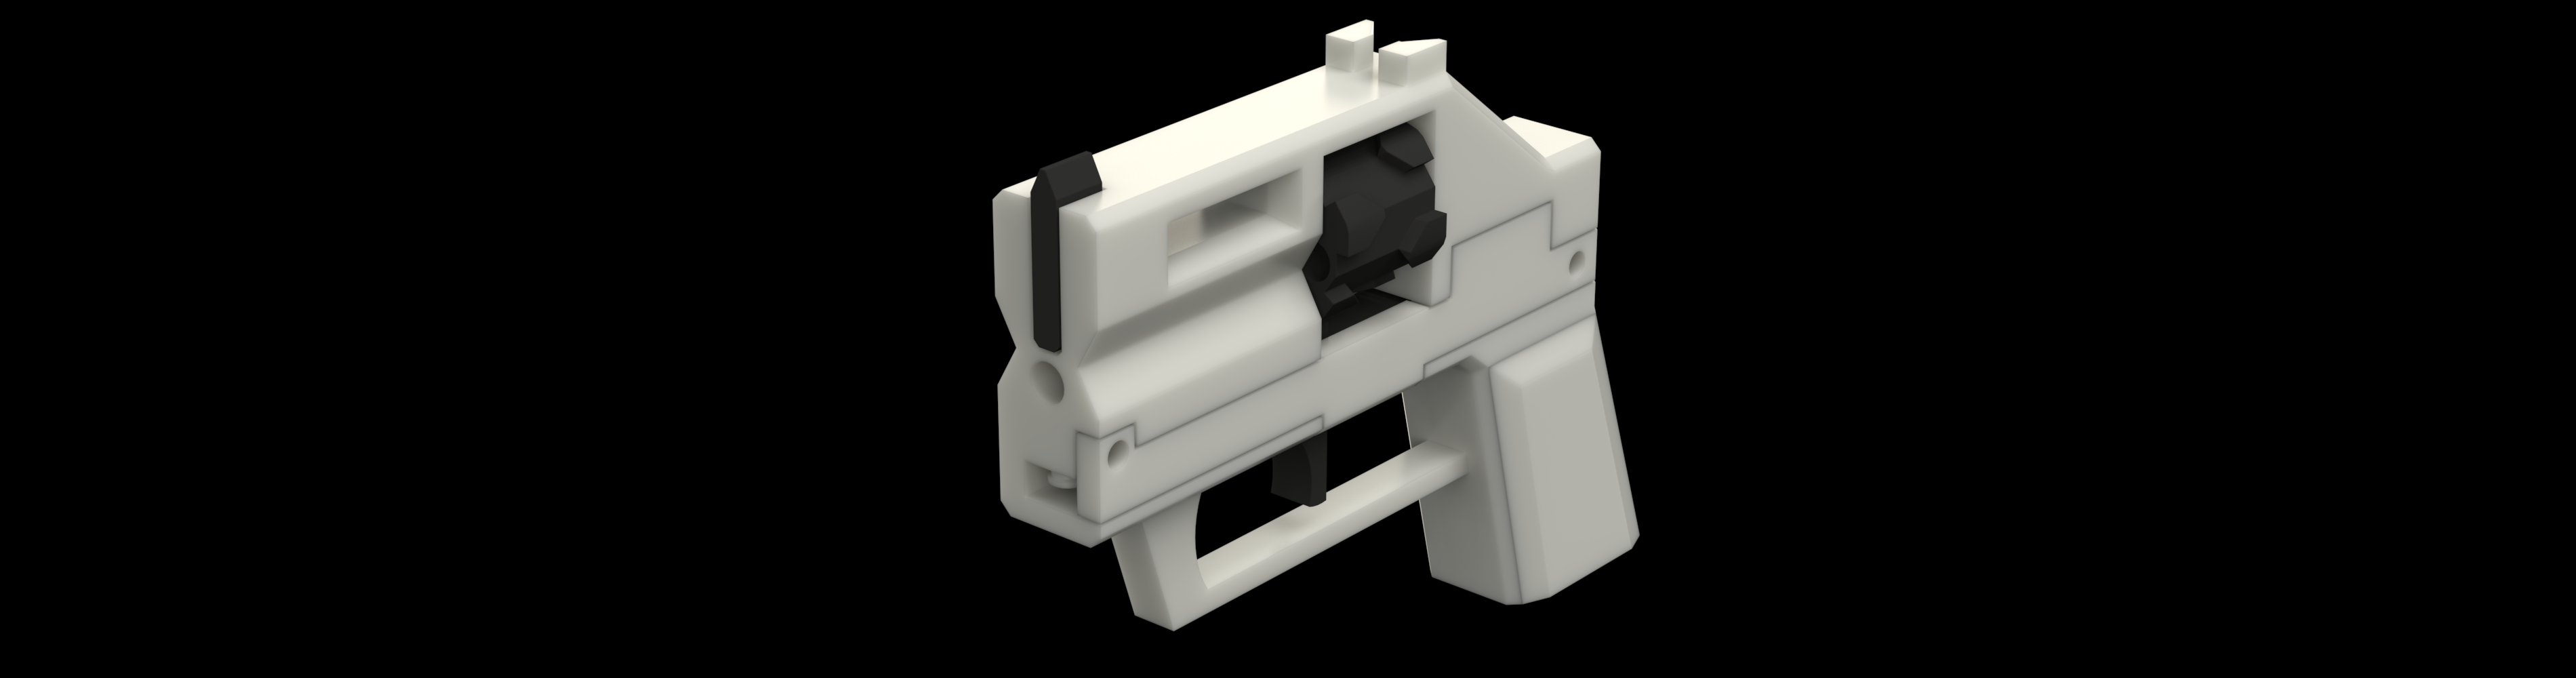 Partisan Revolver V1.0 (3D Print Kit Gun) | DEFCAD